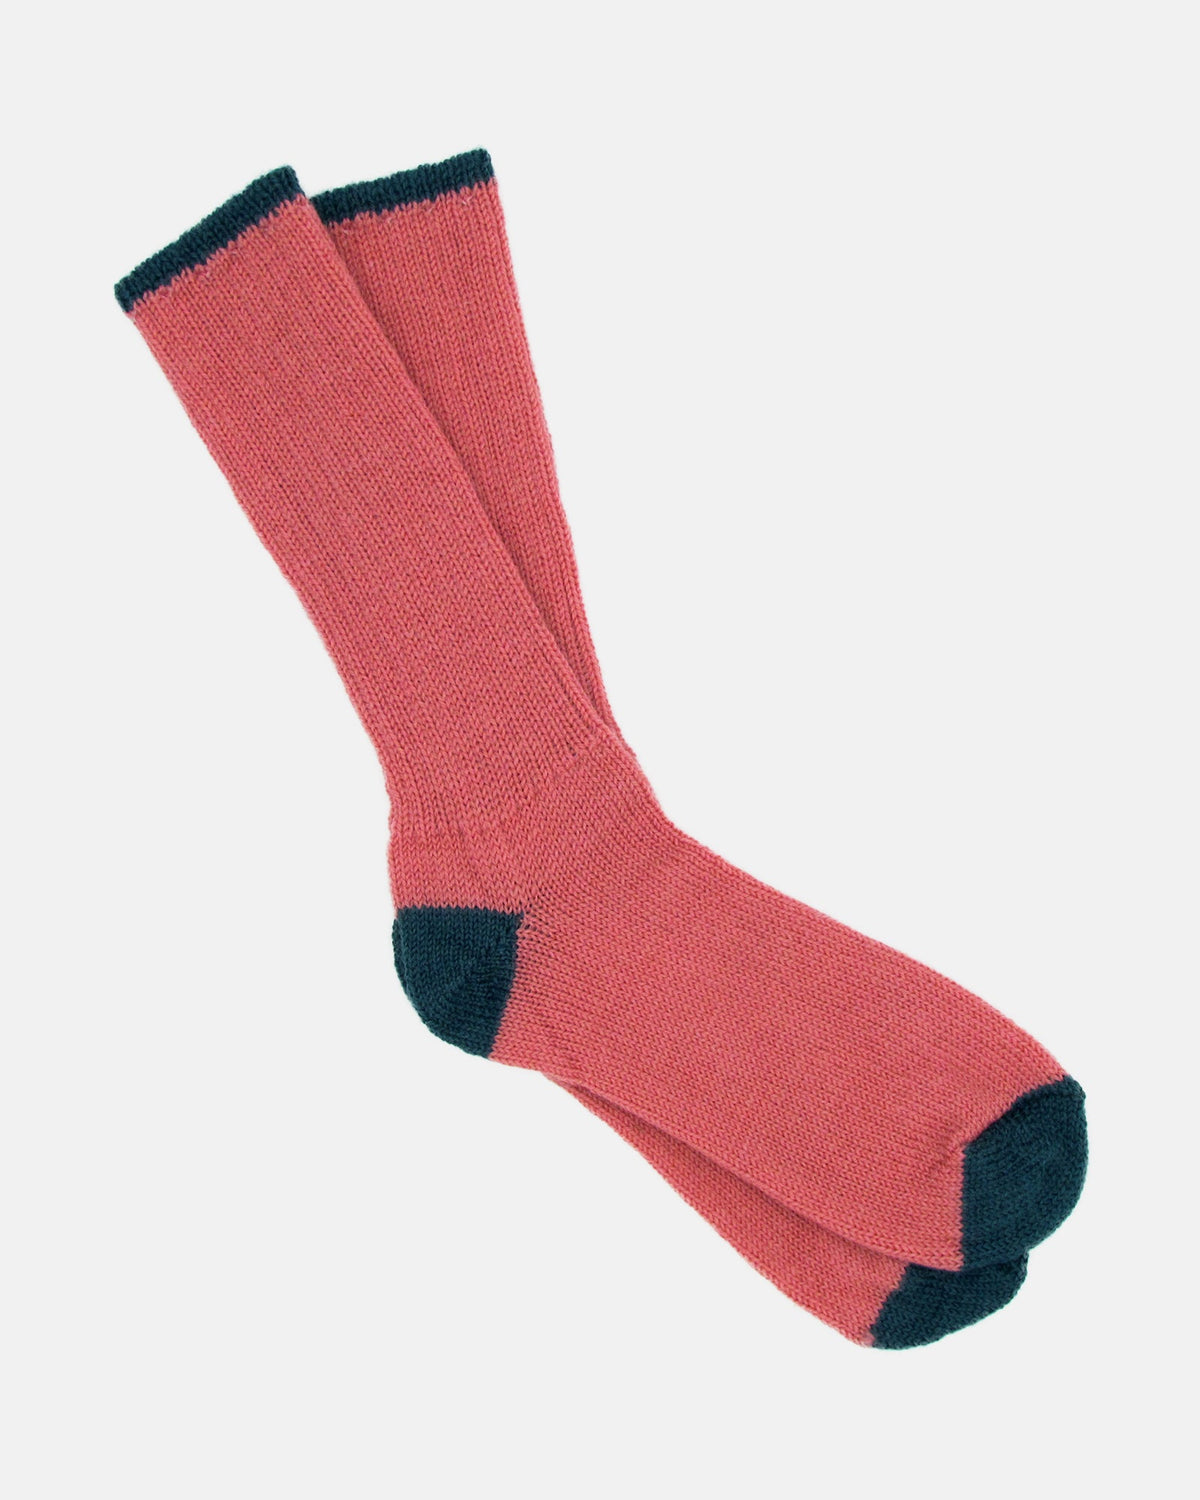 Soft Wool Socks - Salmon/Indigo - BRIT LOCKER